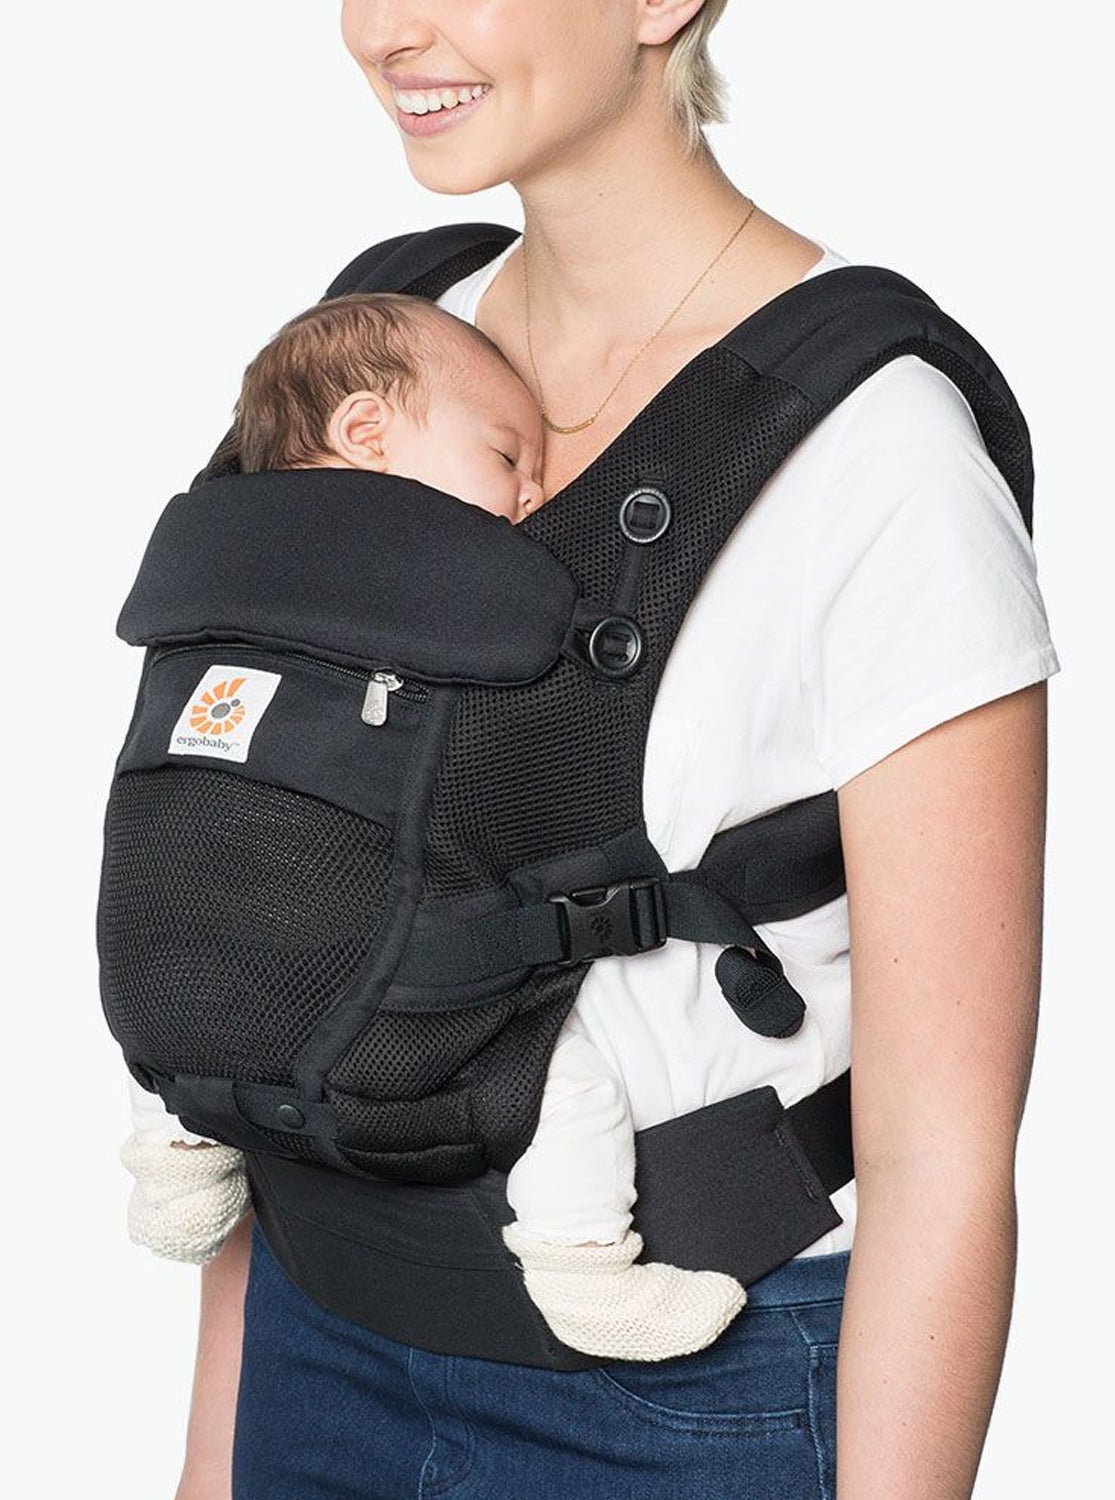 Buy ERGOBABY Adapt Baby Carrier – ANB Baby